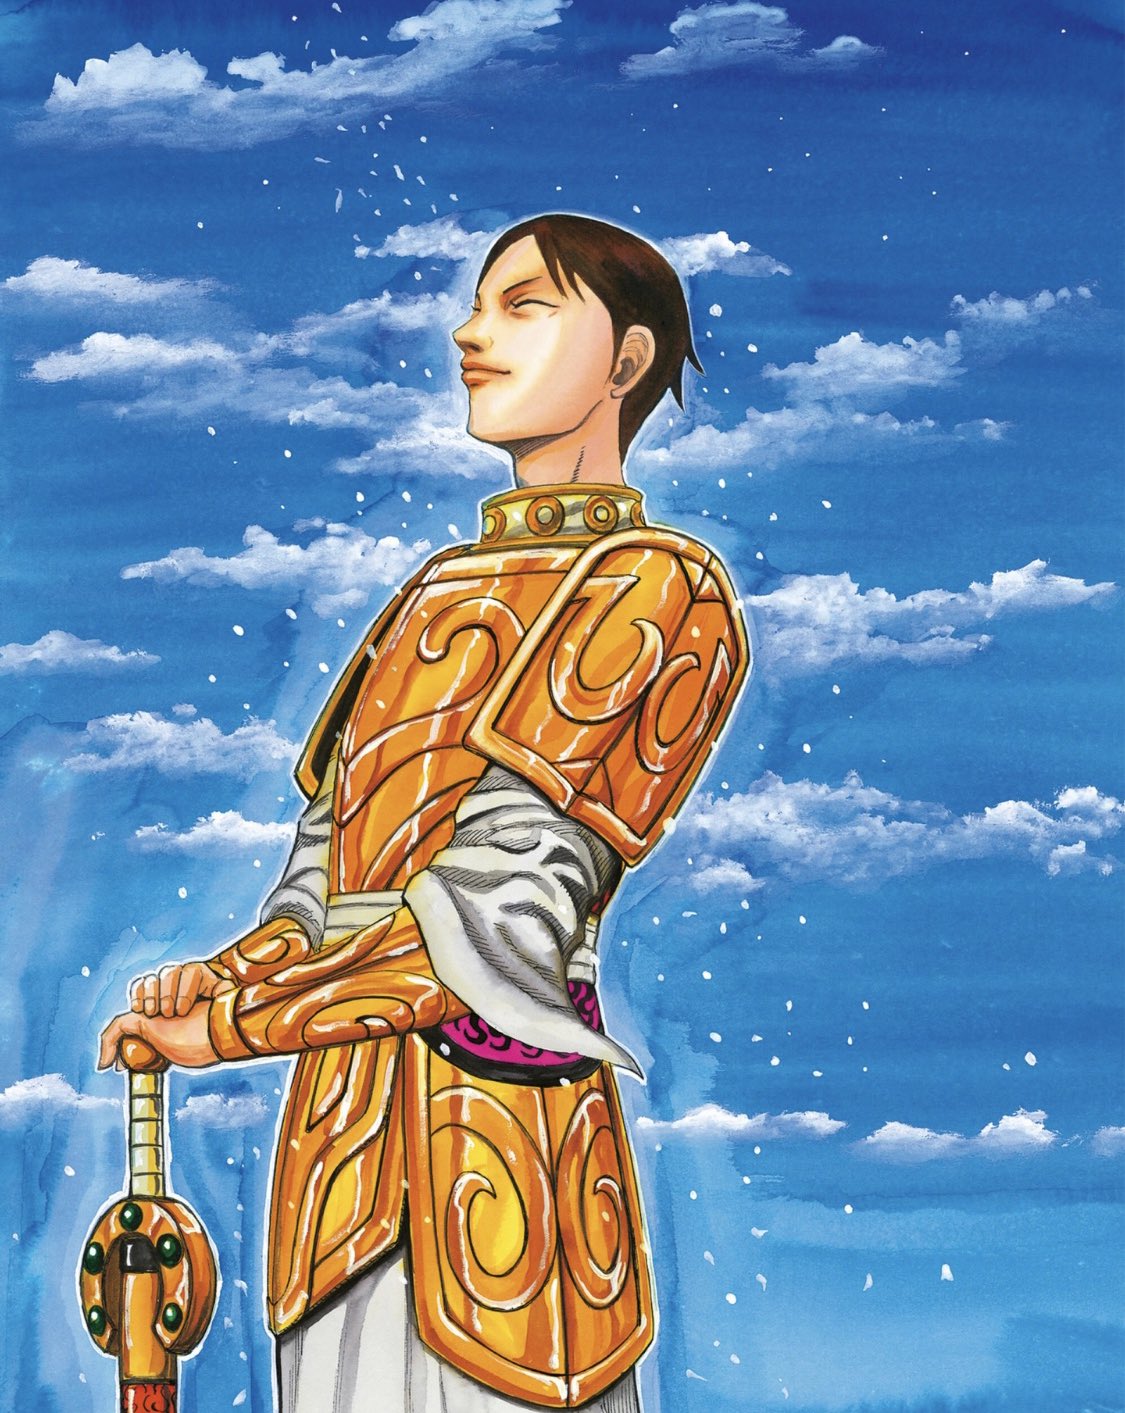 Kingdom 3 – 14 - Lost in Anime